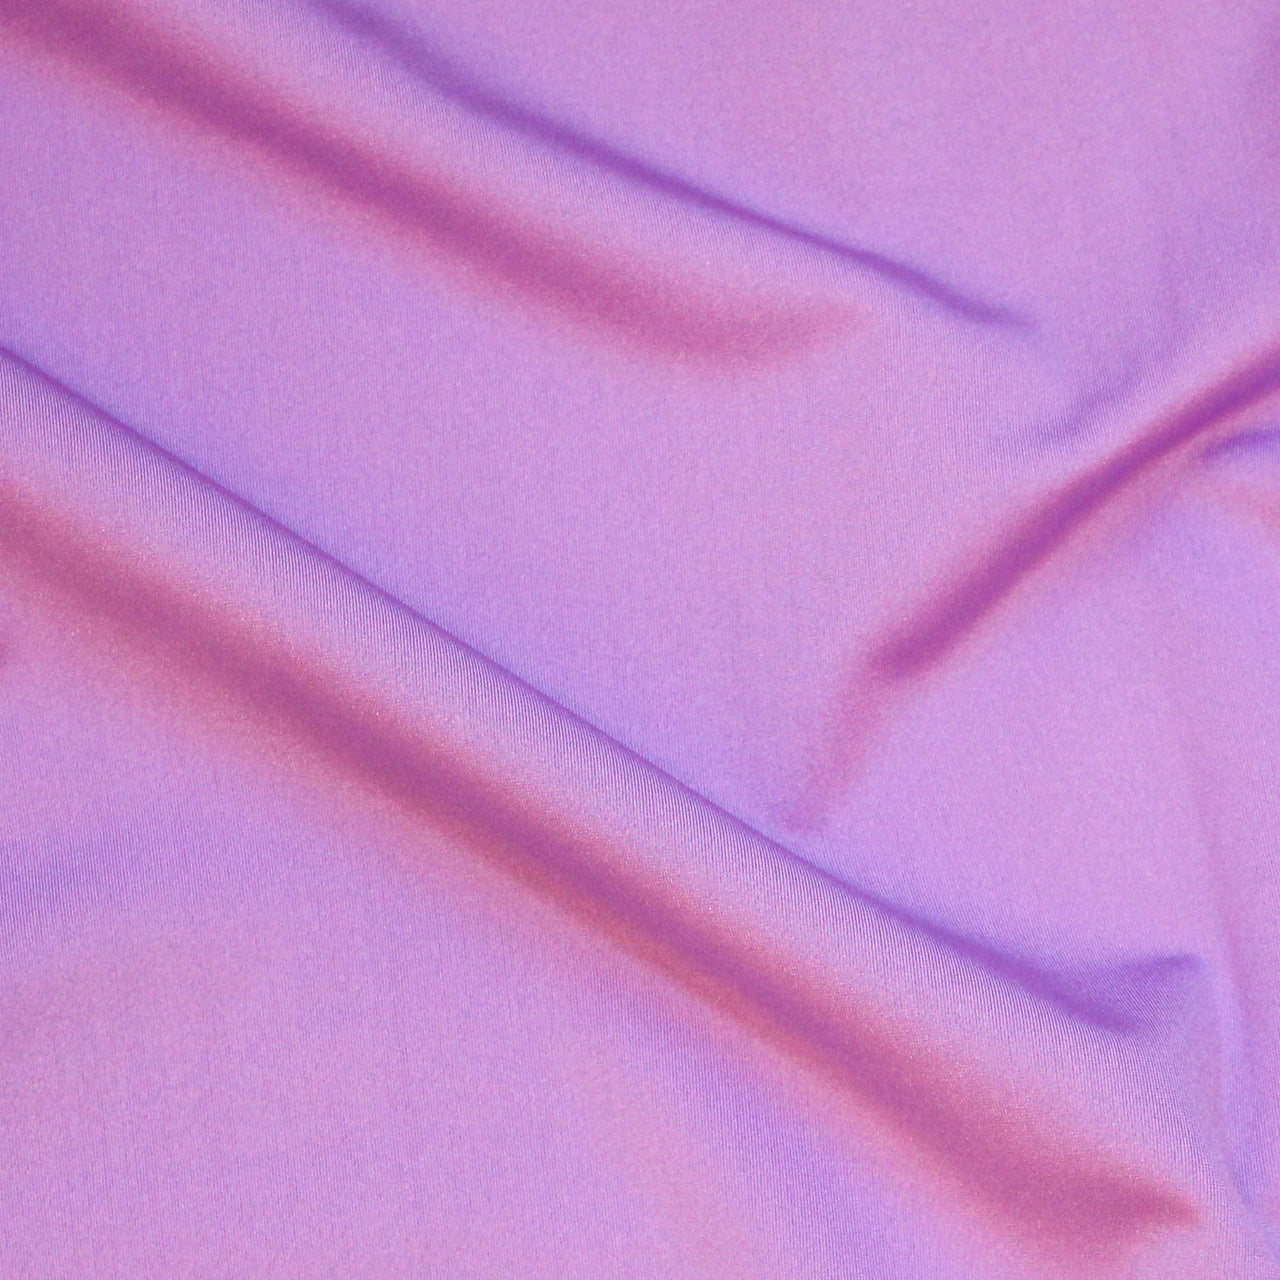 Lilac - Nylon Spandex Fabric - 4 Way All Way Stretch Superior Quality - Leotards, Dancewear